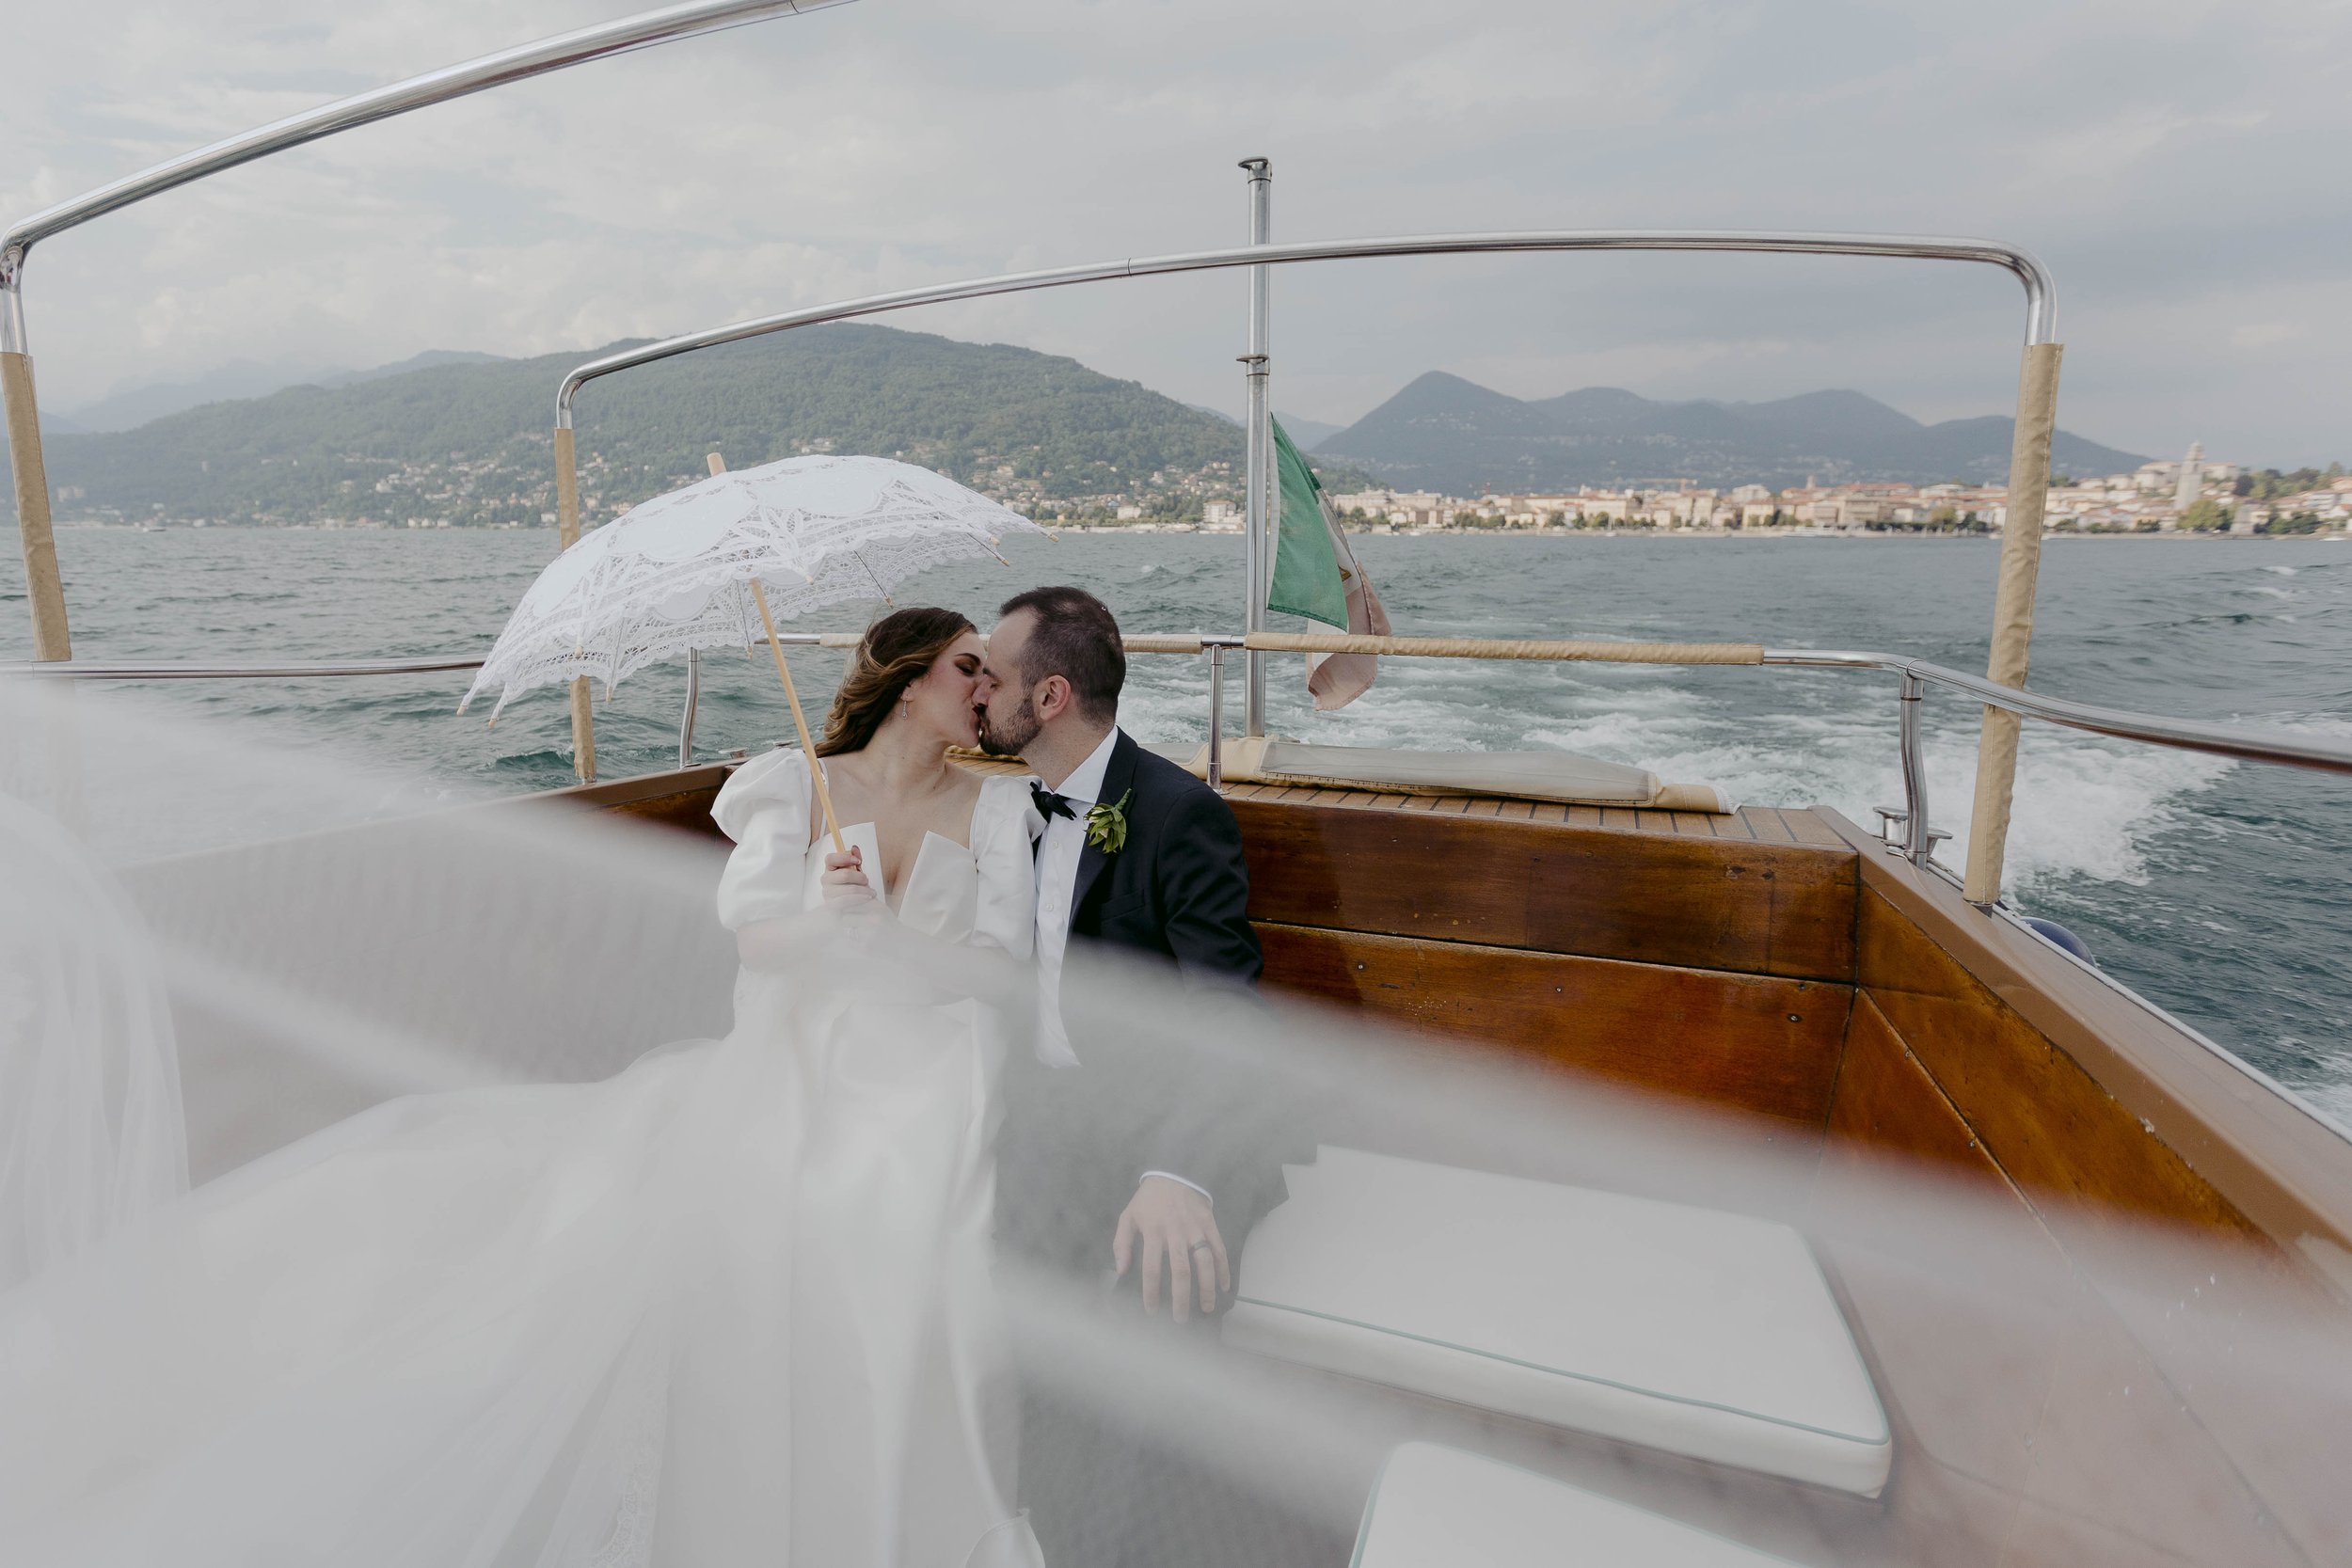 007 - Bride and groom portraits - Miriam Callegari Fotografa.JPG